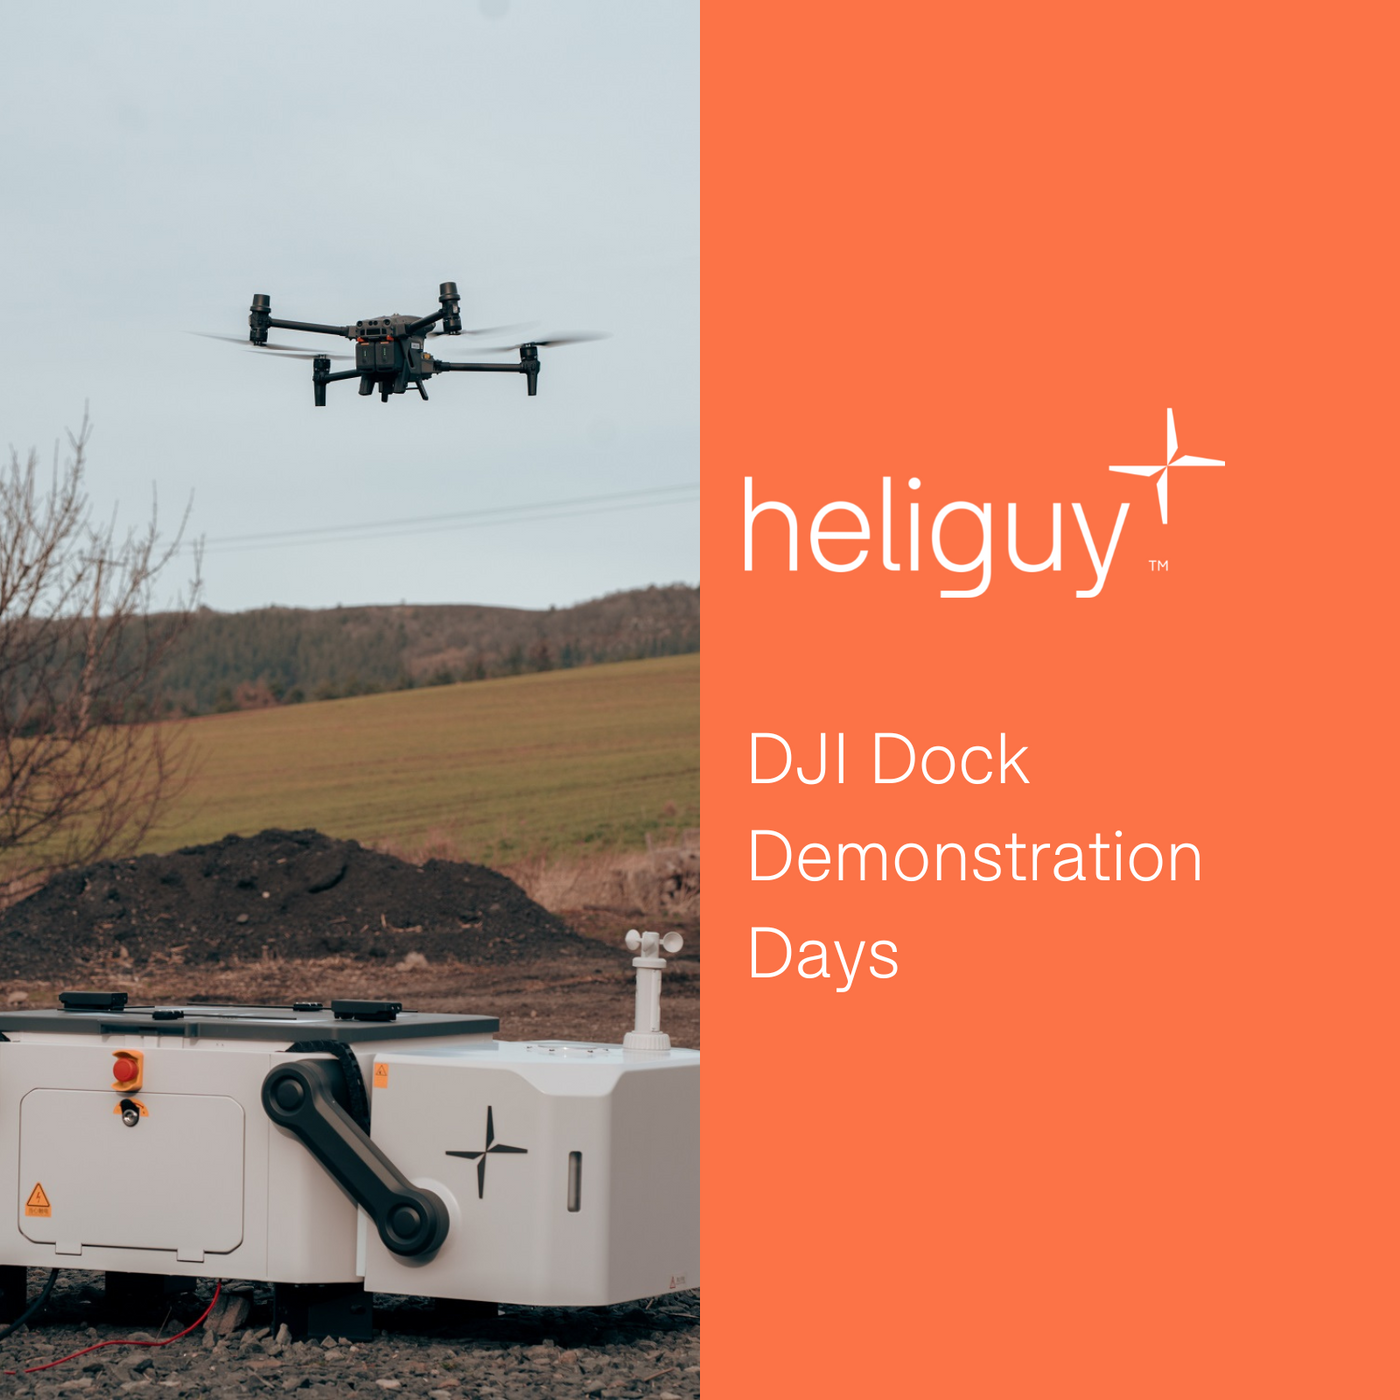 DJI Dock Drone In A Box Demonstration Days